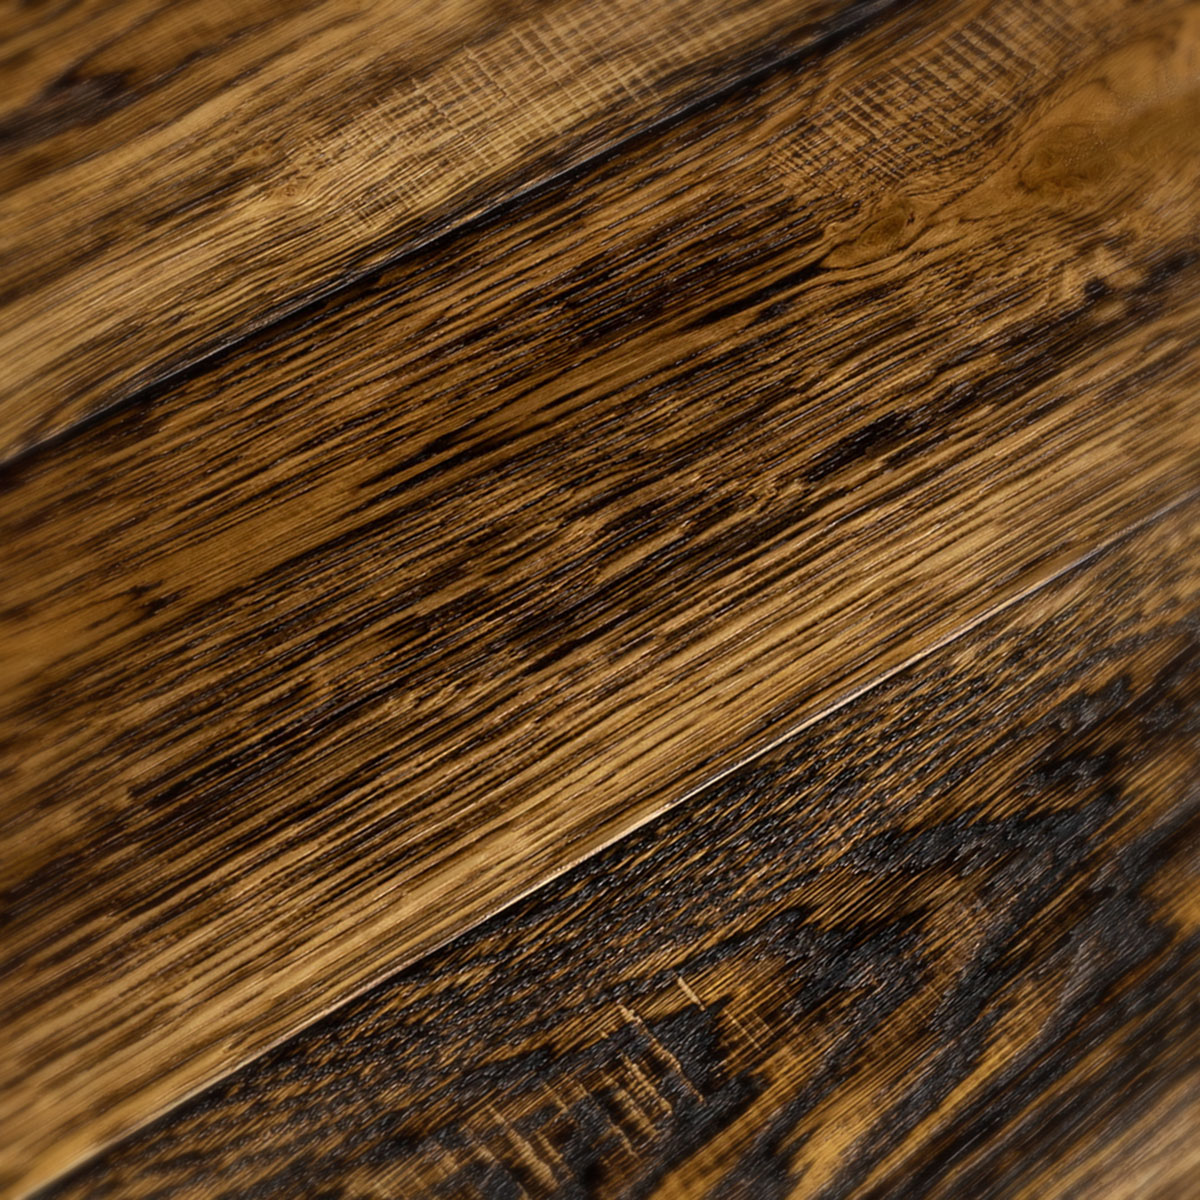 Loxley Herringbone - Tumbled Edged Distressed Rustic Oak Floor